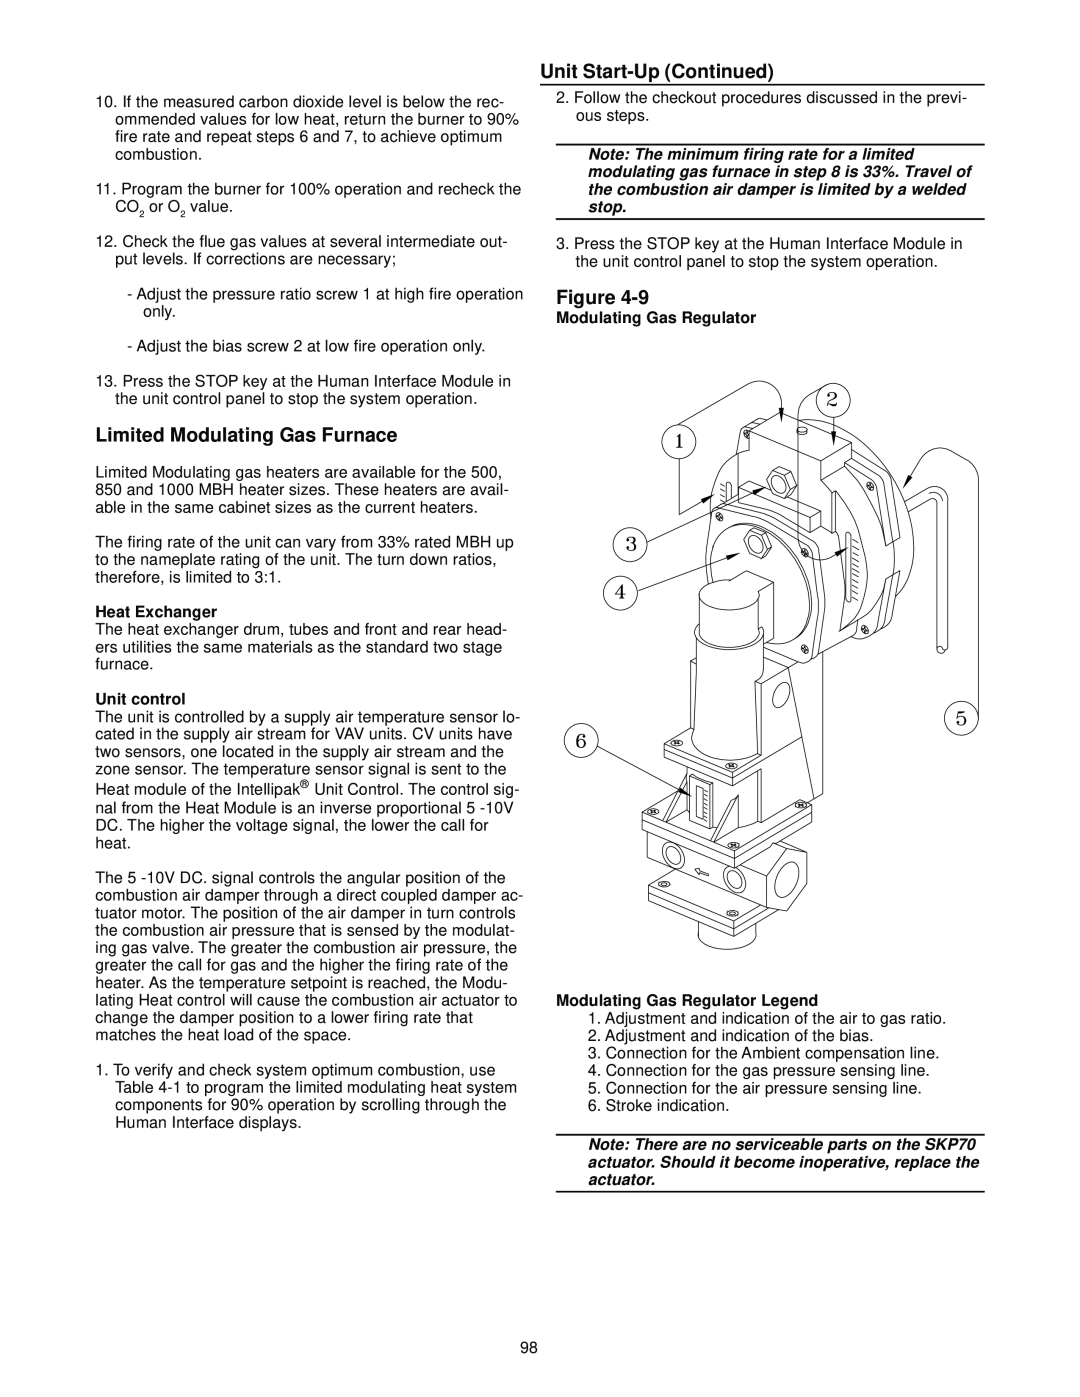 Trane RT-SVX10C-EN Limited Modulating Gas Furnace, Unit Start-UpContinued, Figure, Modulating Gas Regulator, Unit control 